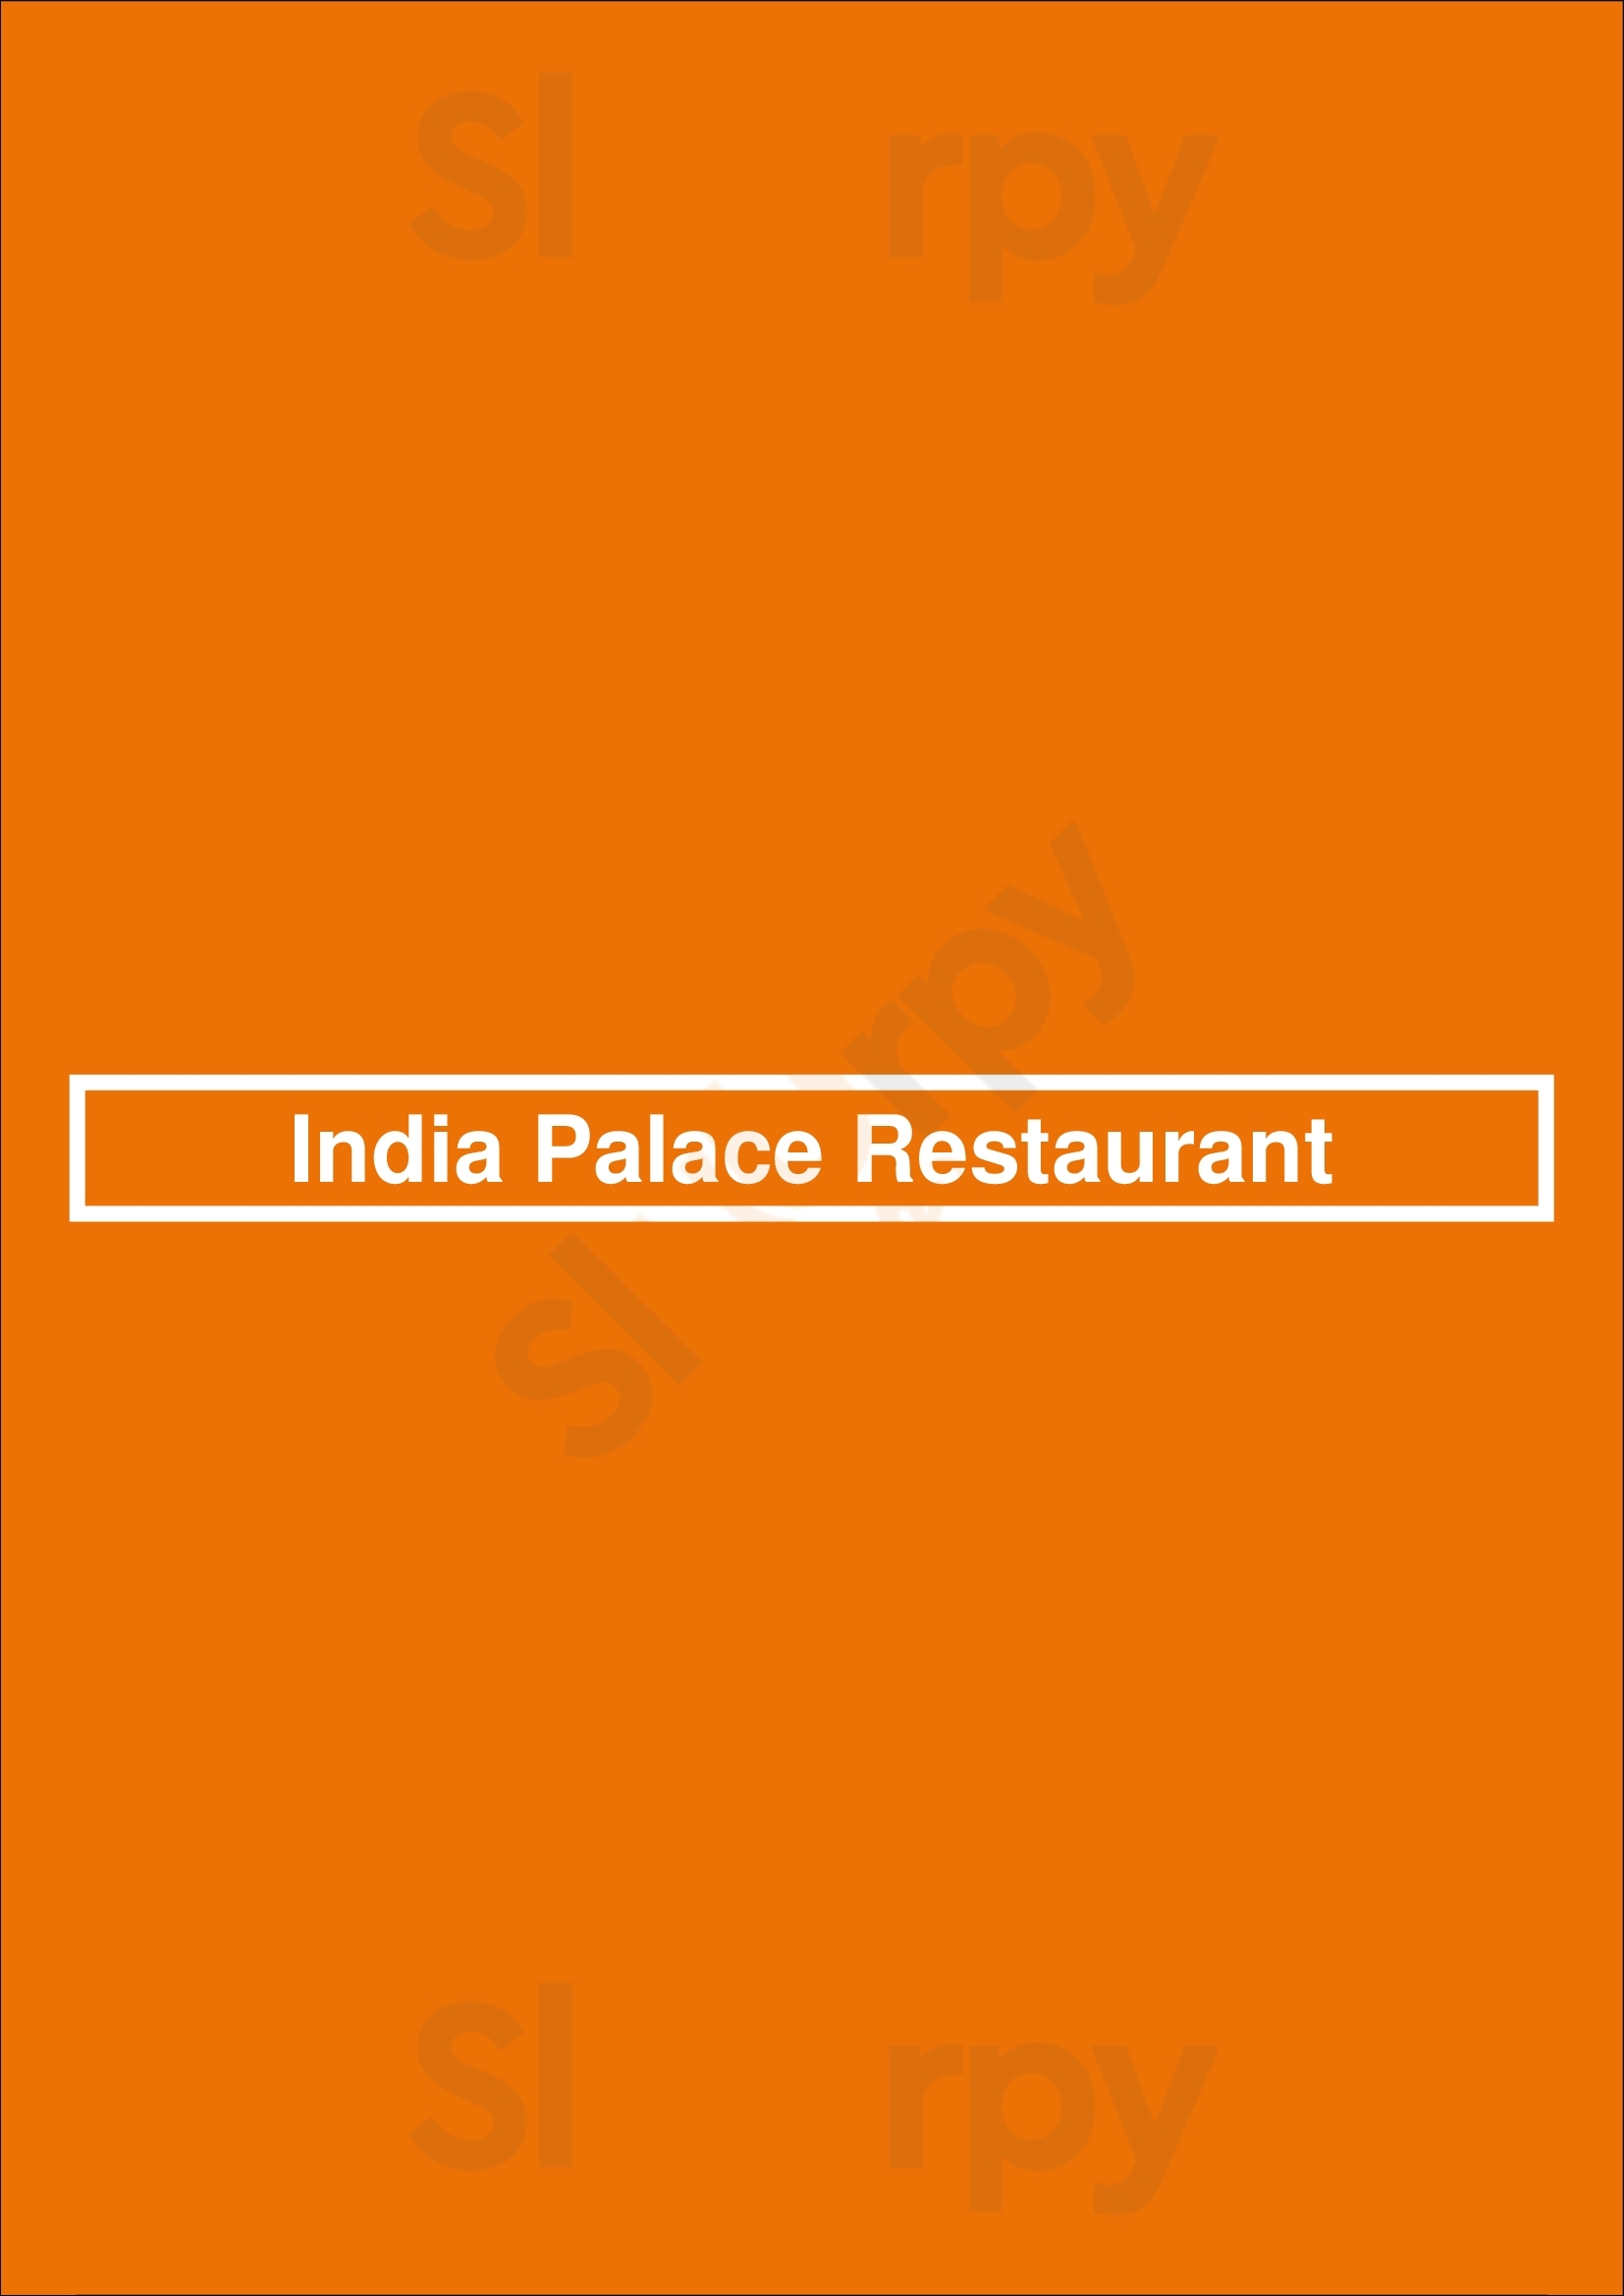 India Palace Restaurant Regina Menu - 1